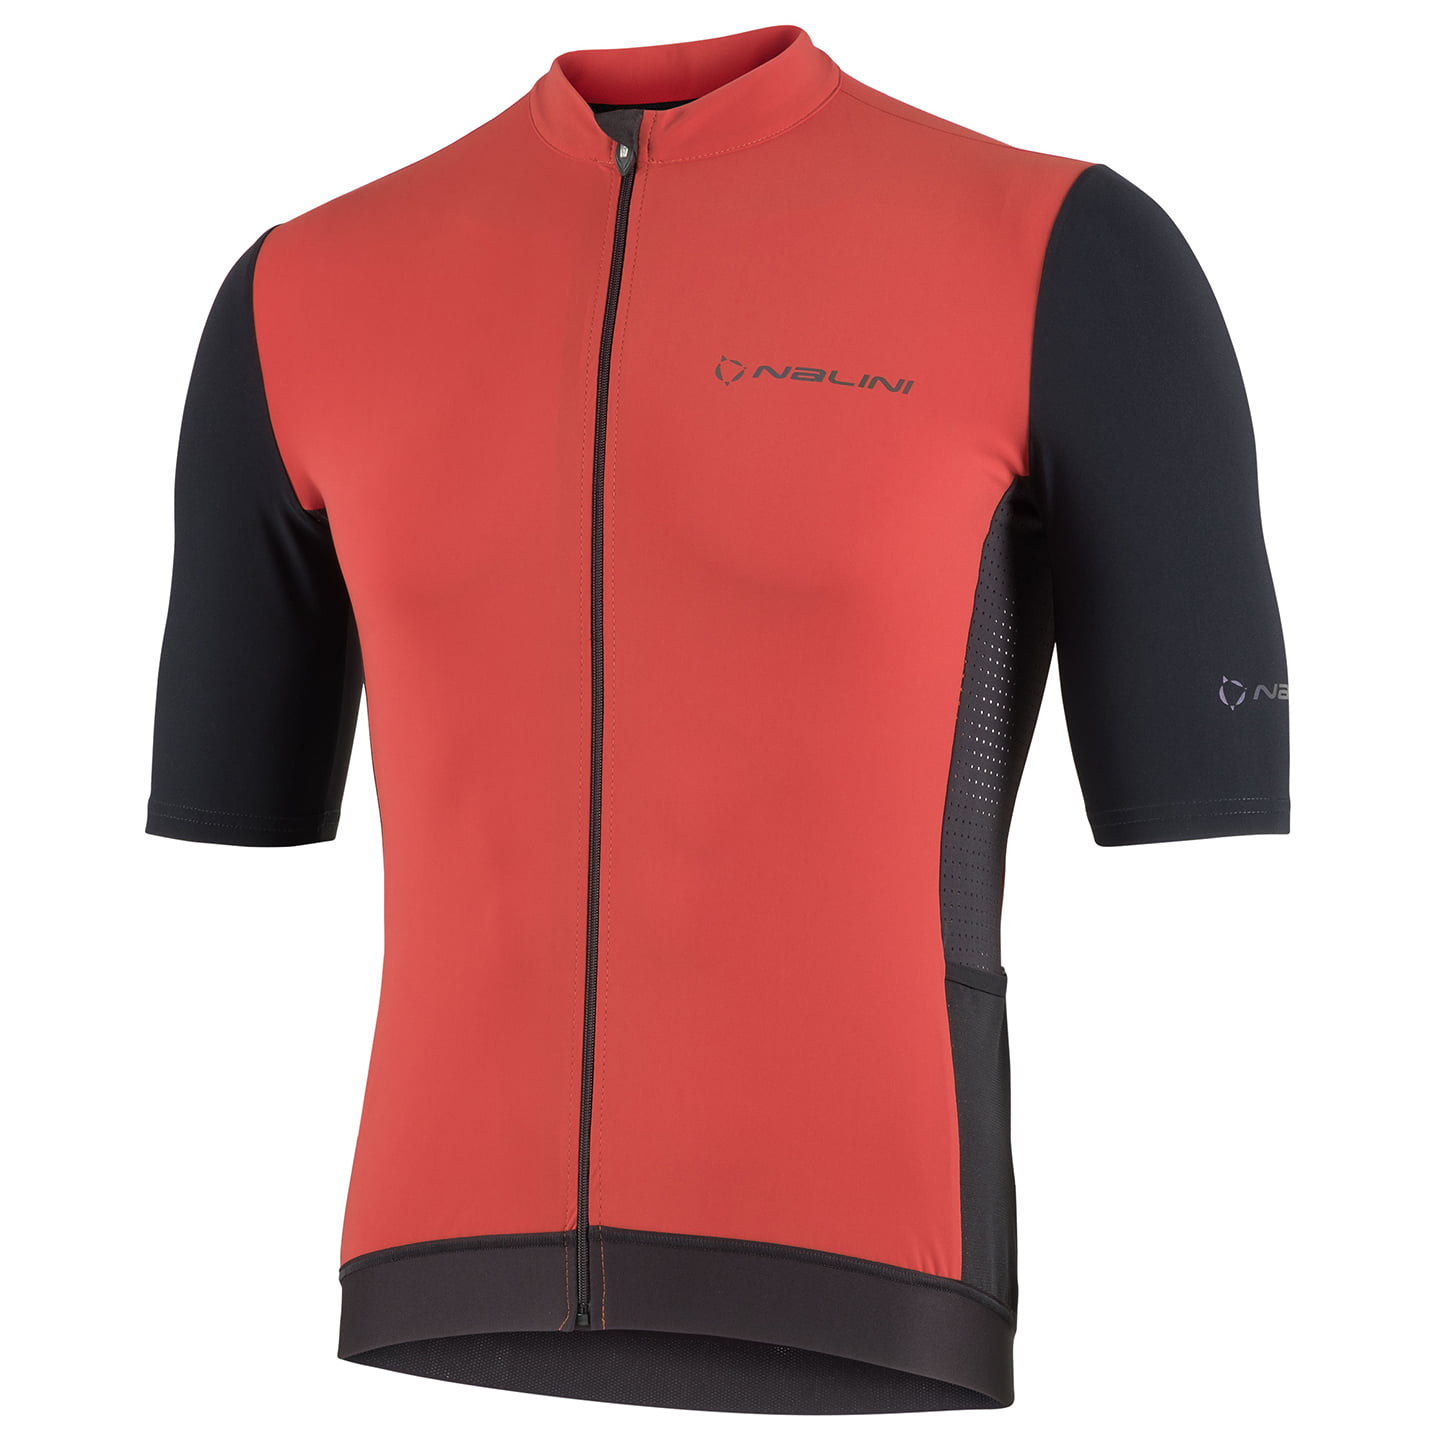 NALINI New Sun Block Short Sleeve Jersey Short Sleeve Jersey, for men, size L, Cycling jersey, Cycling clothing